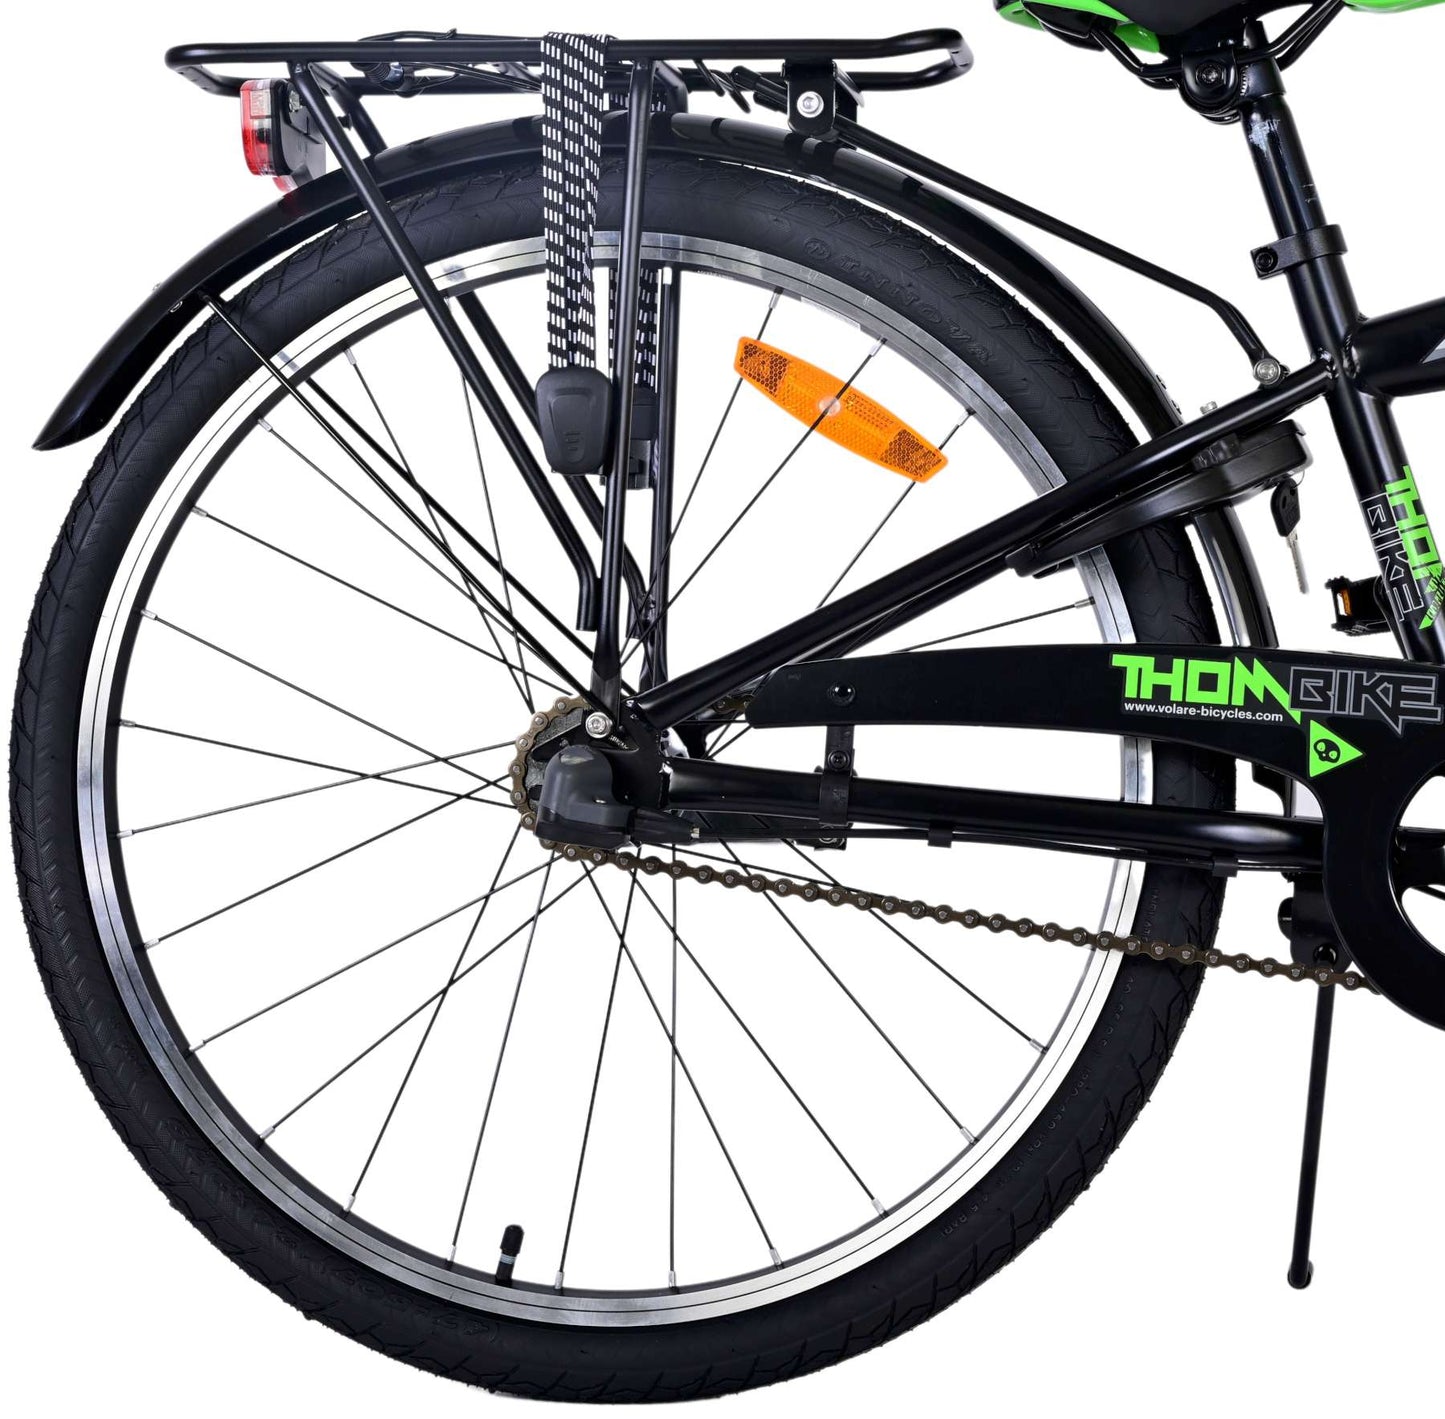 Bicicleta para niños Volare Thombike - Niños - 24 pulgadas - Negro verde - 3 engranajes